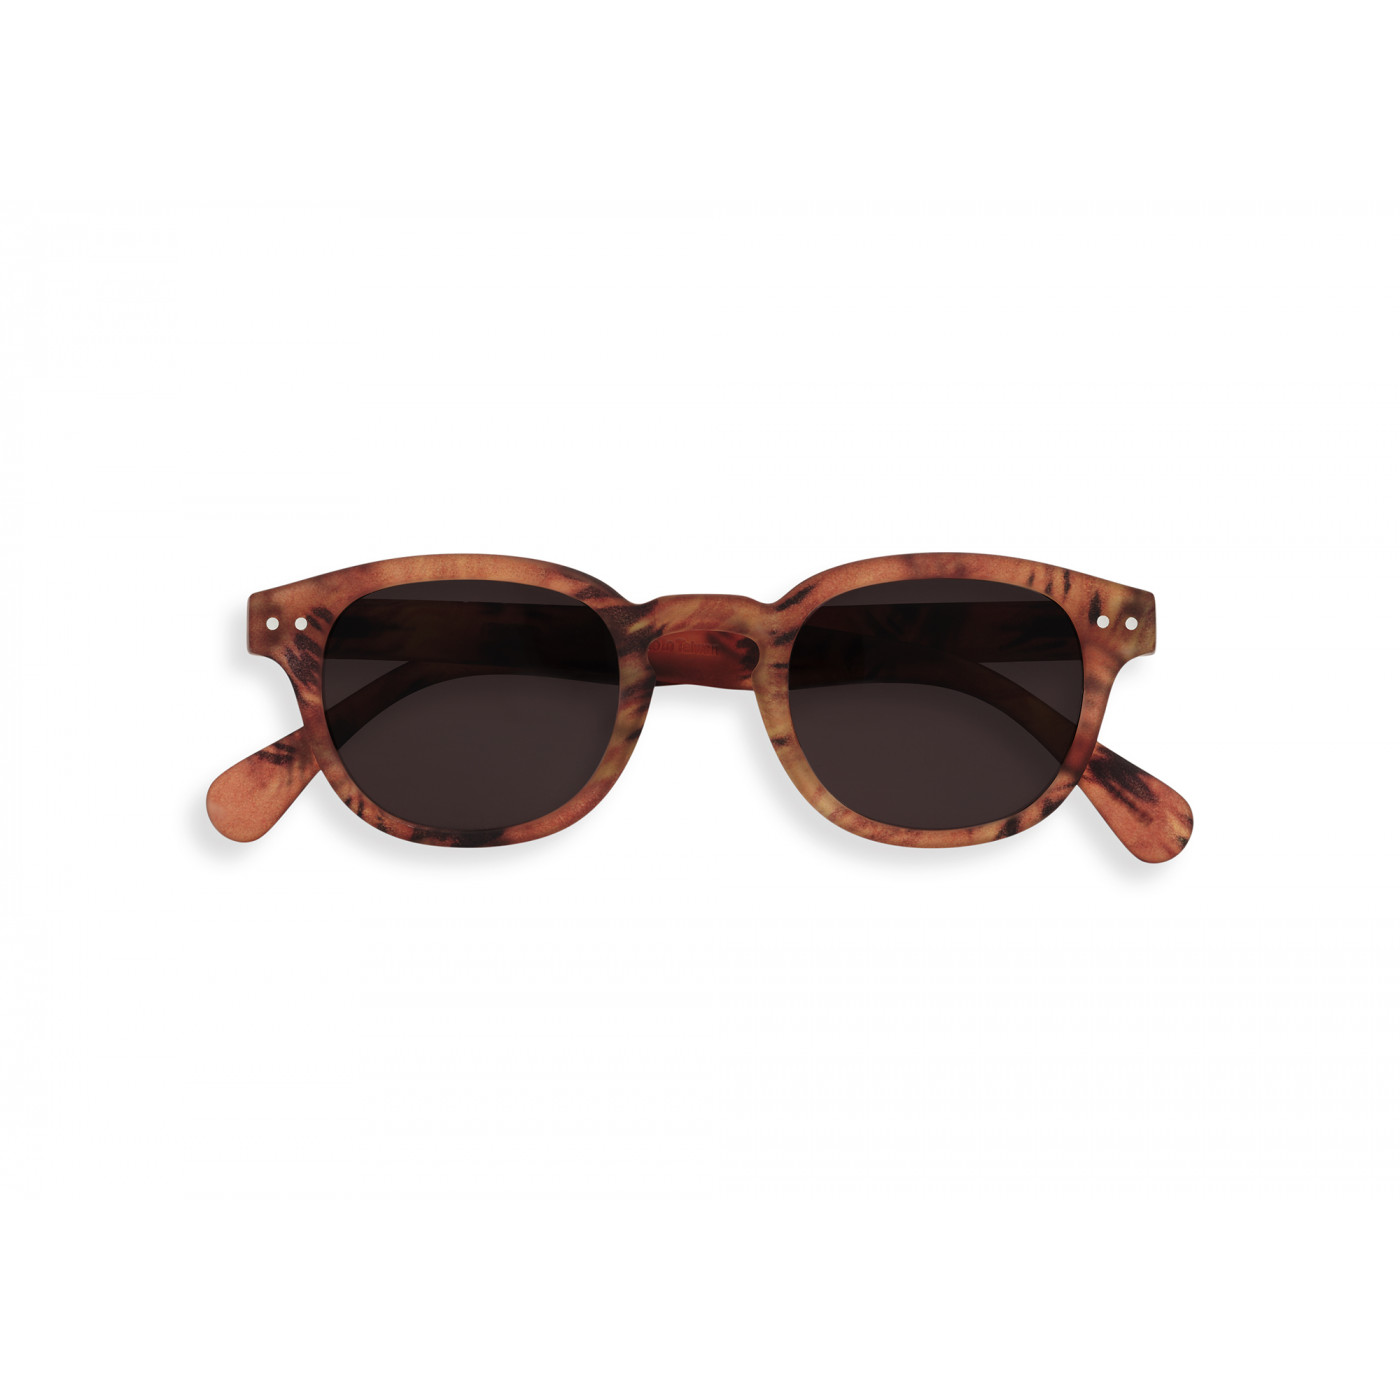 sunglasses frame C wild bright by izipizi essentia collection